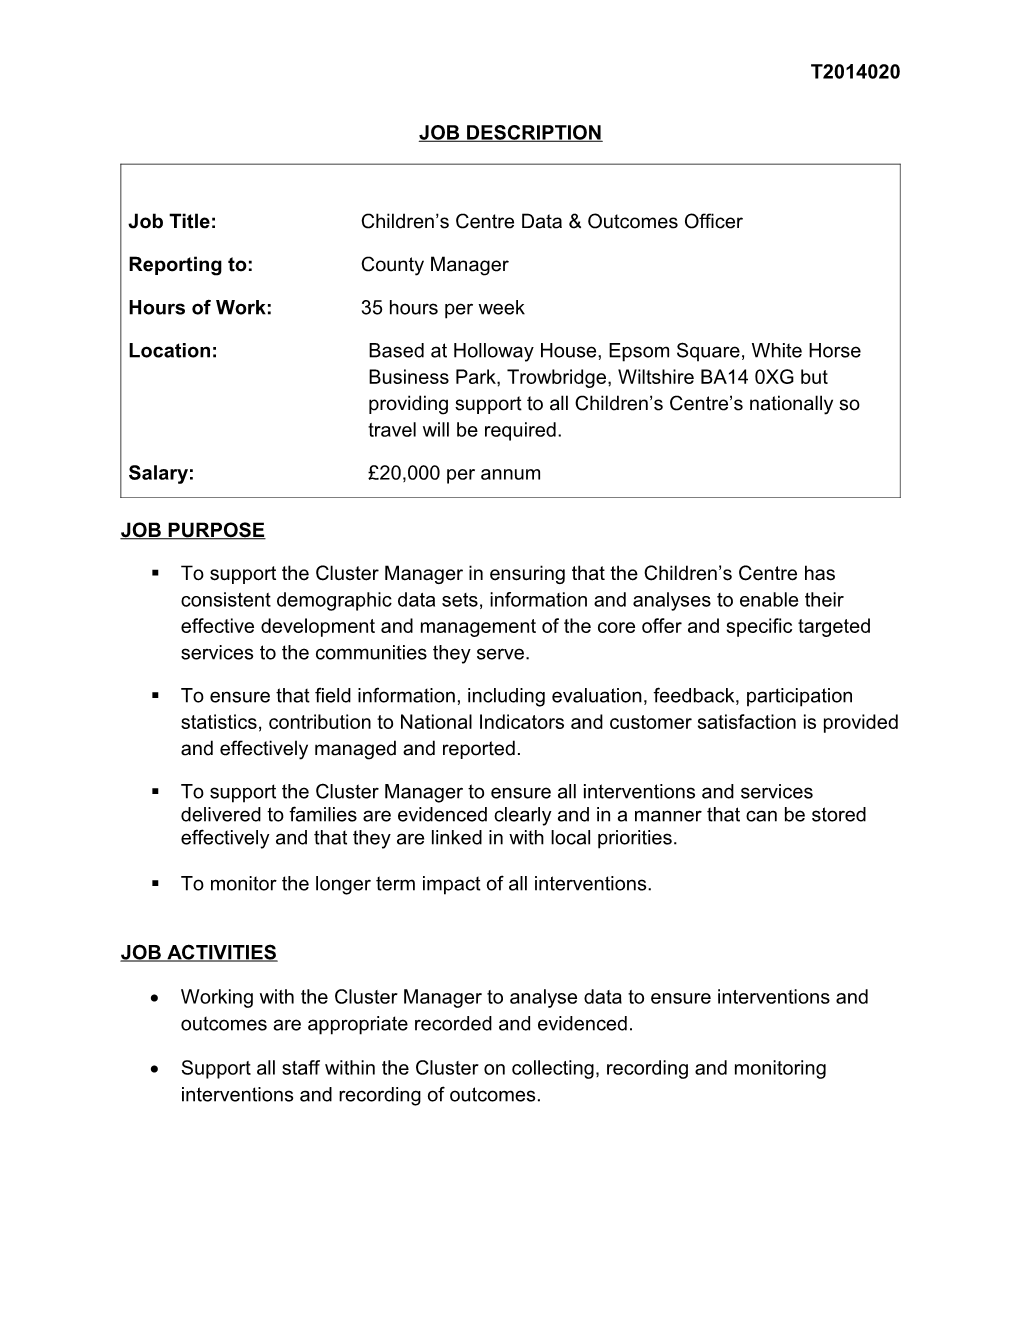 Job Title:Children S Centre Data & Outcomes Officer